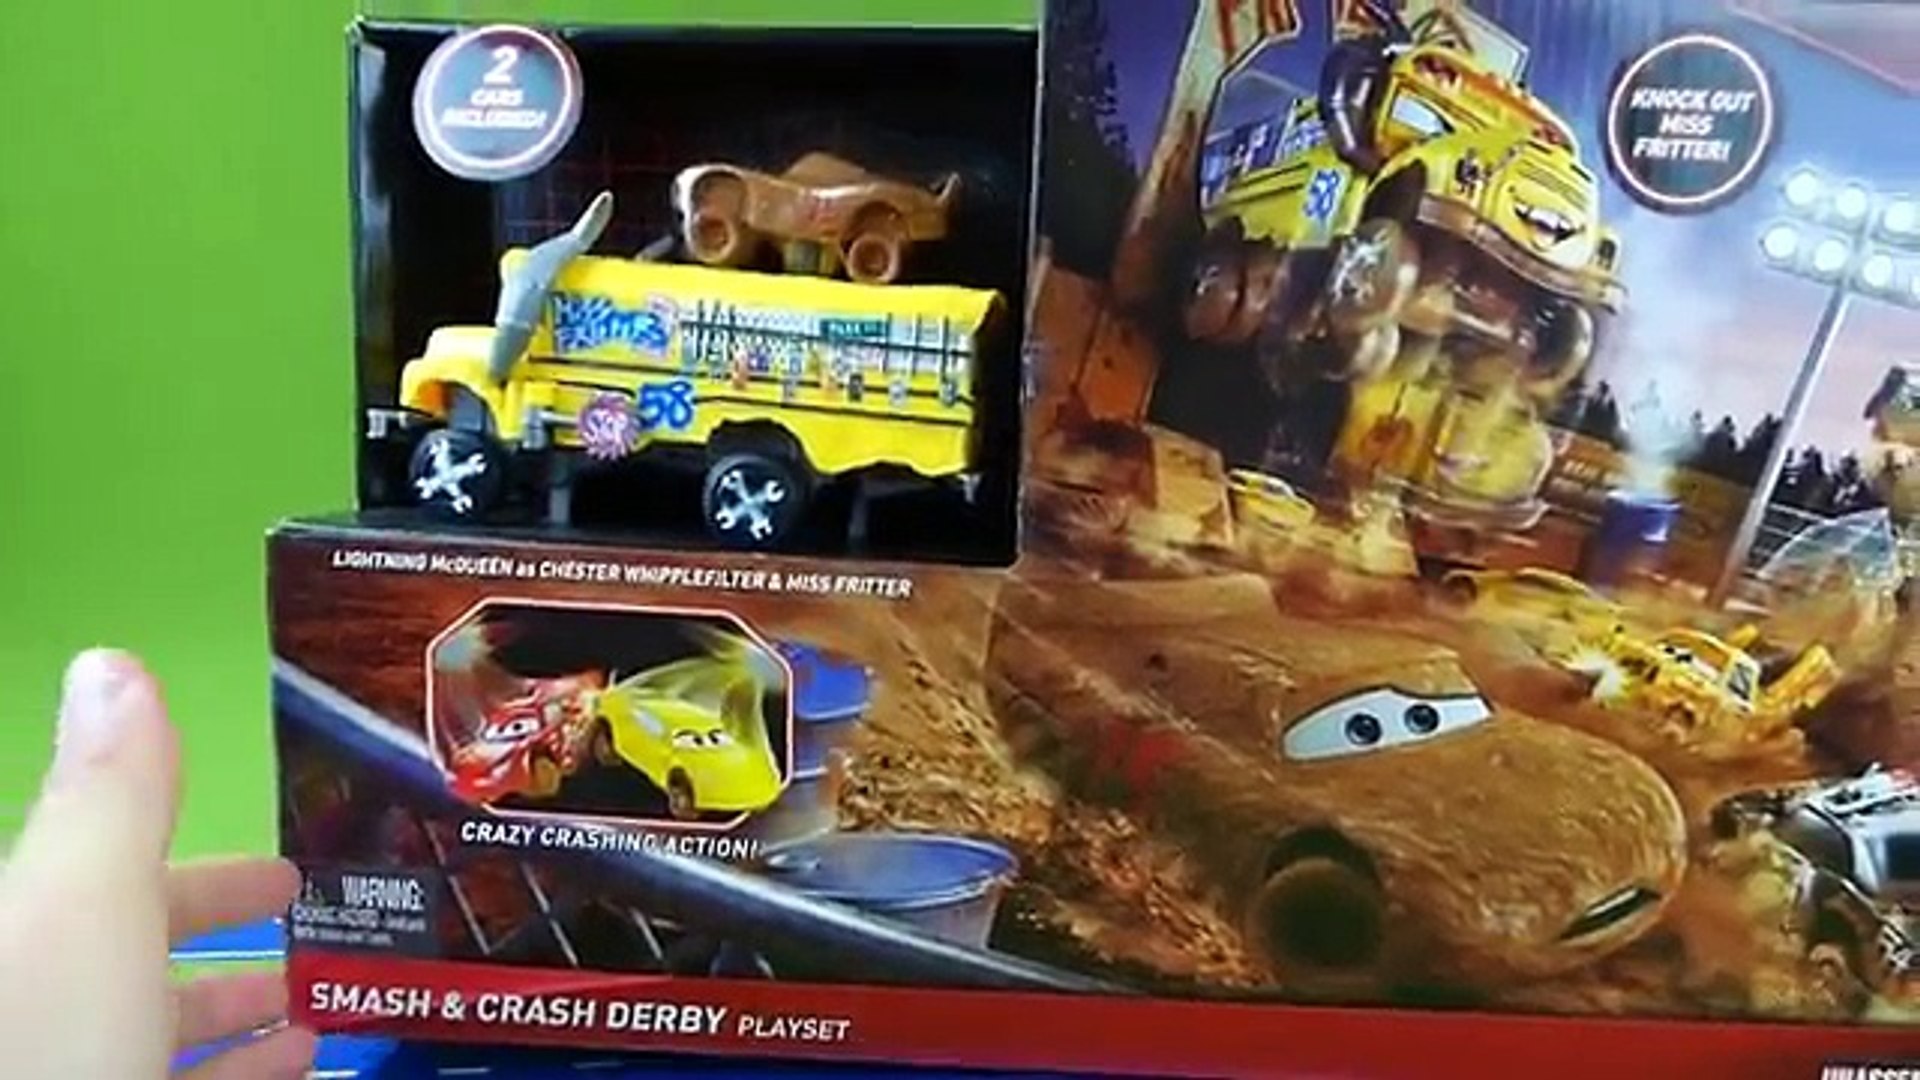 Cars 3 Crazy Crash & Smash Lightning McQueen 